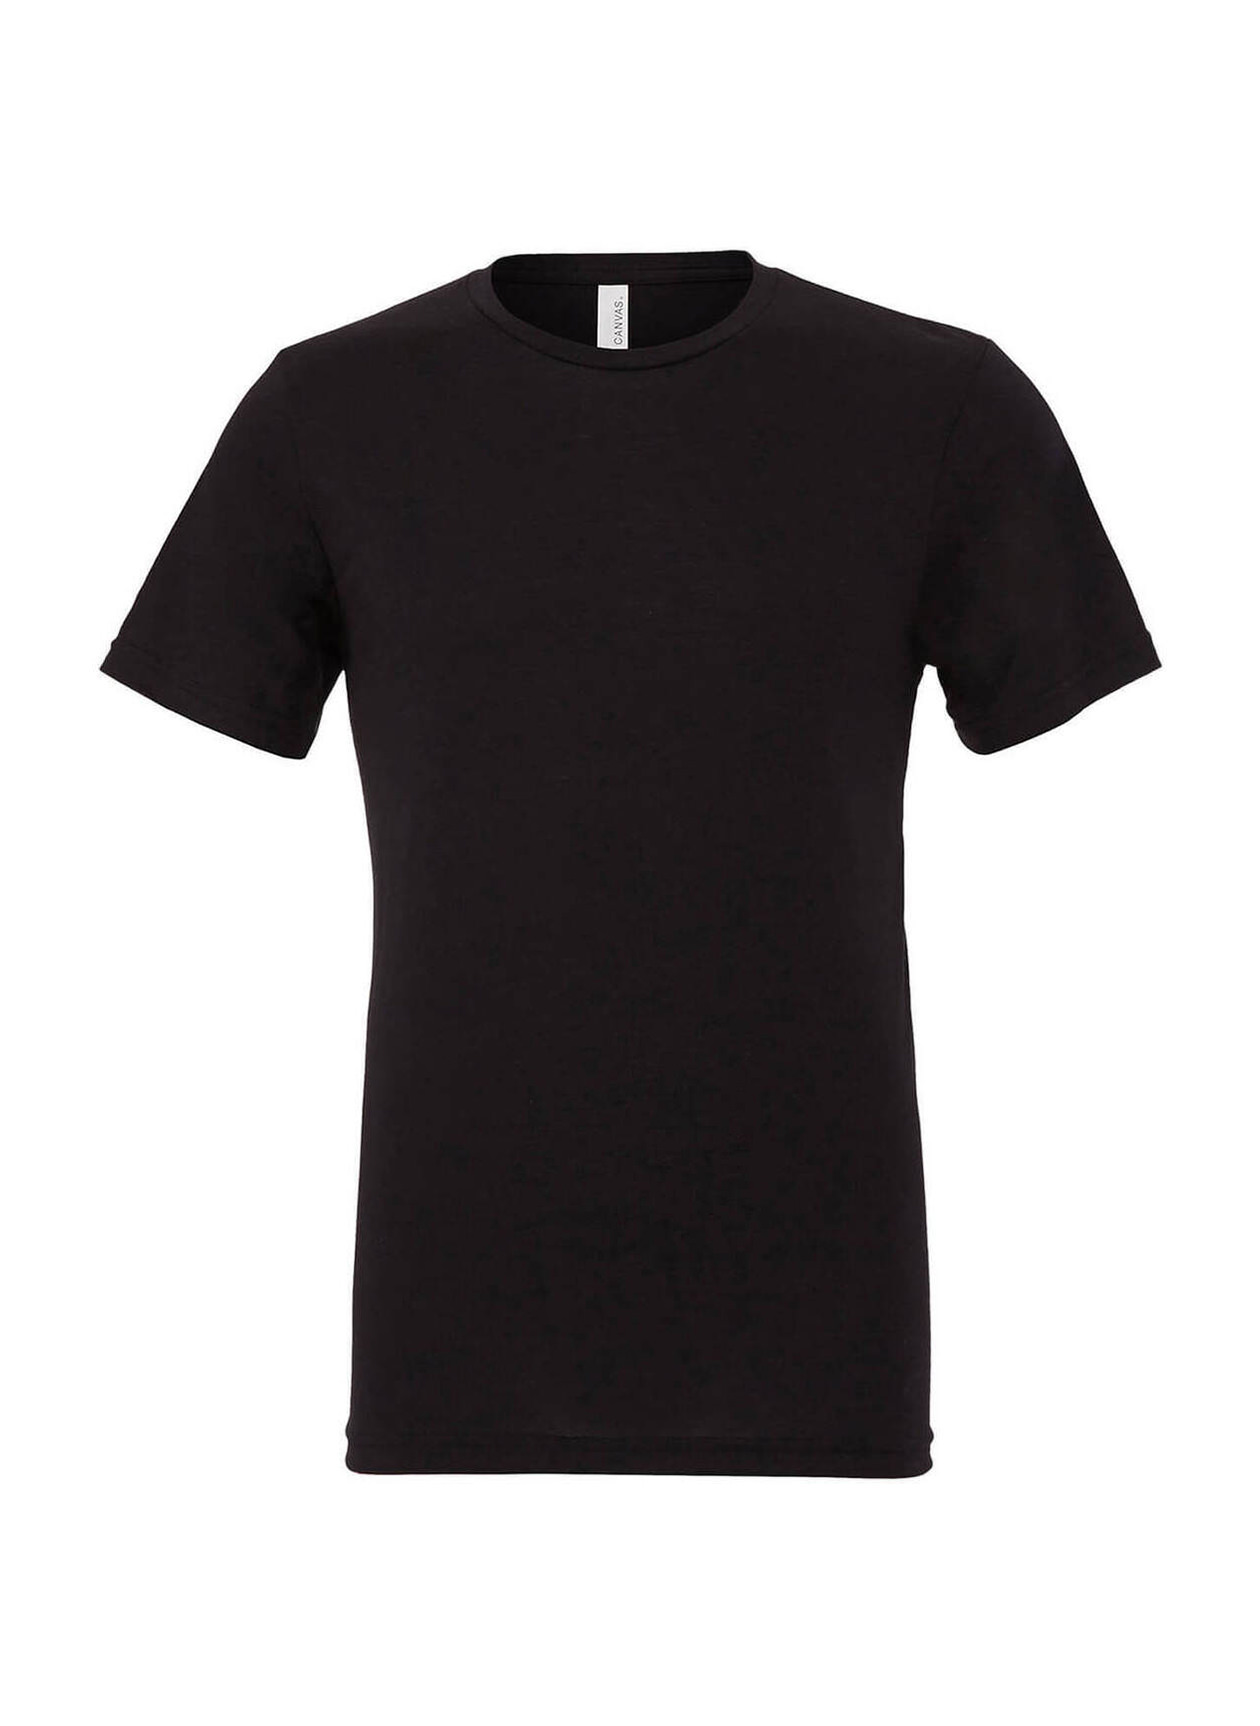 Bella + Canvas Men's Solid Black Triblend T-Shirt